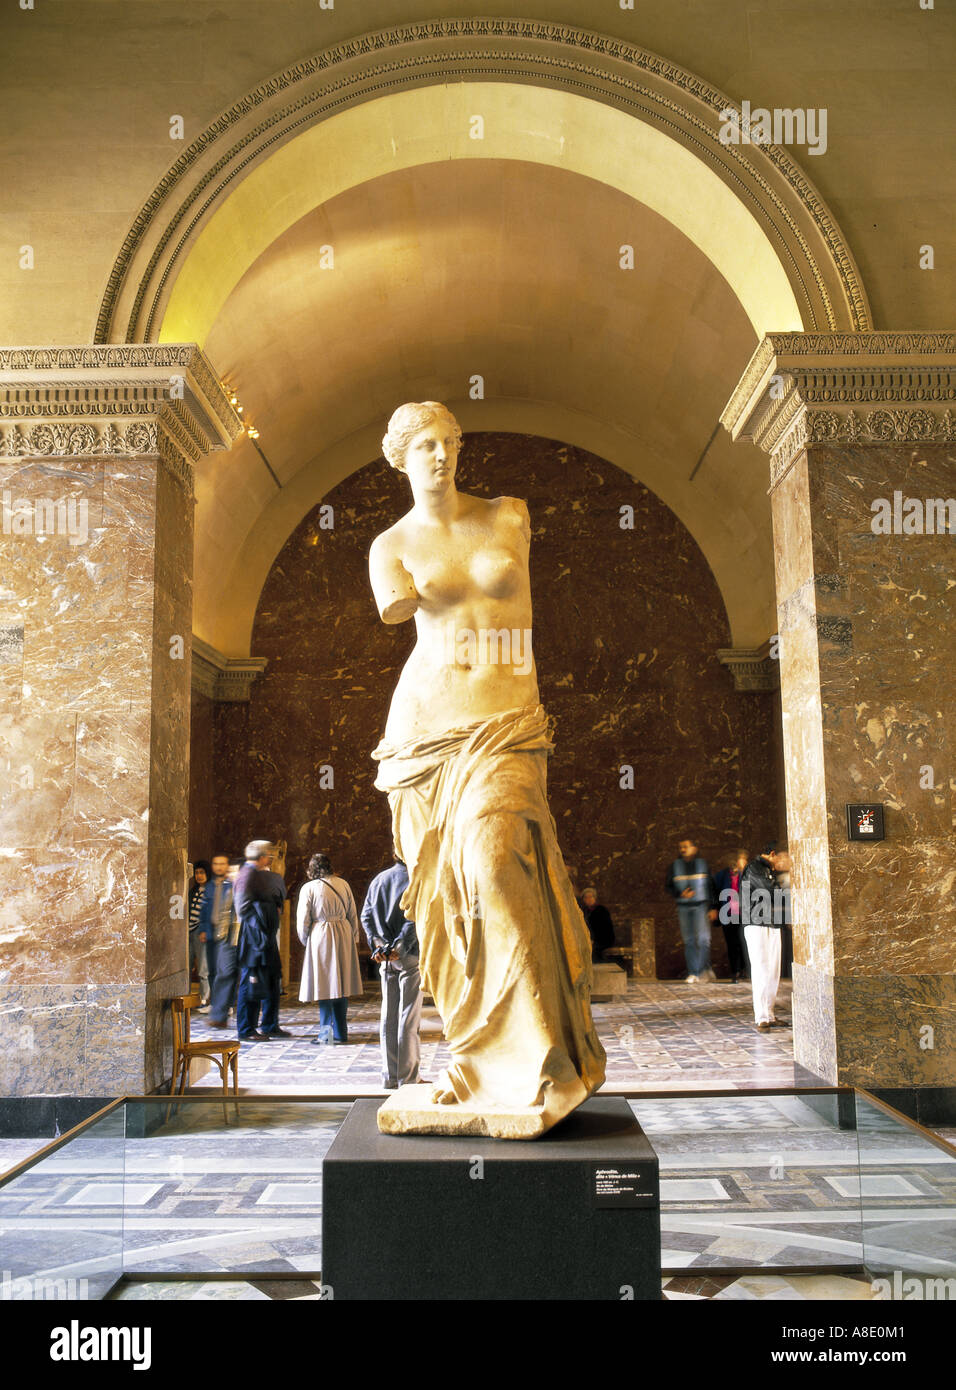 Statue of Venus de Milo in Louvre museum in Paris France Stock Photo - Alamy